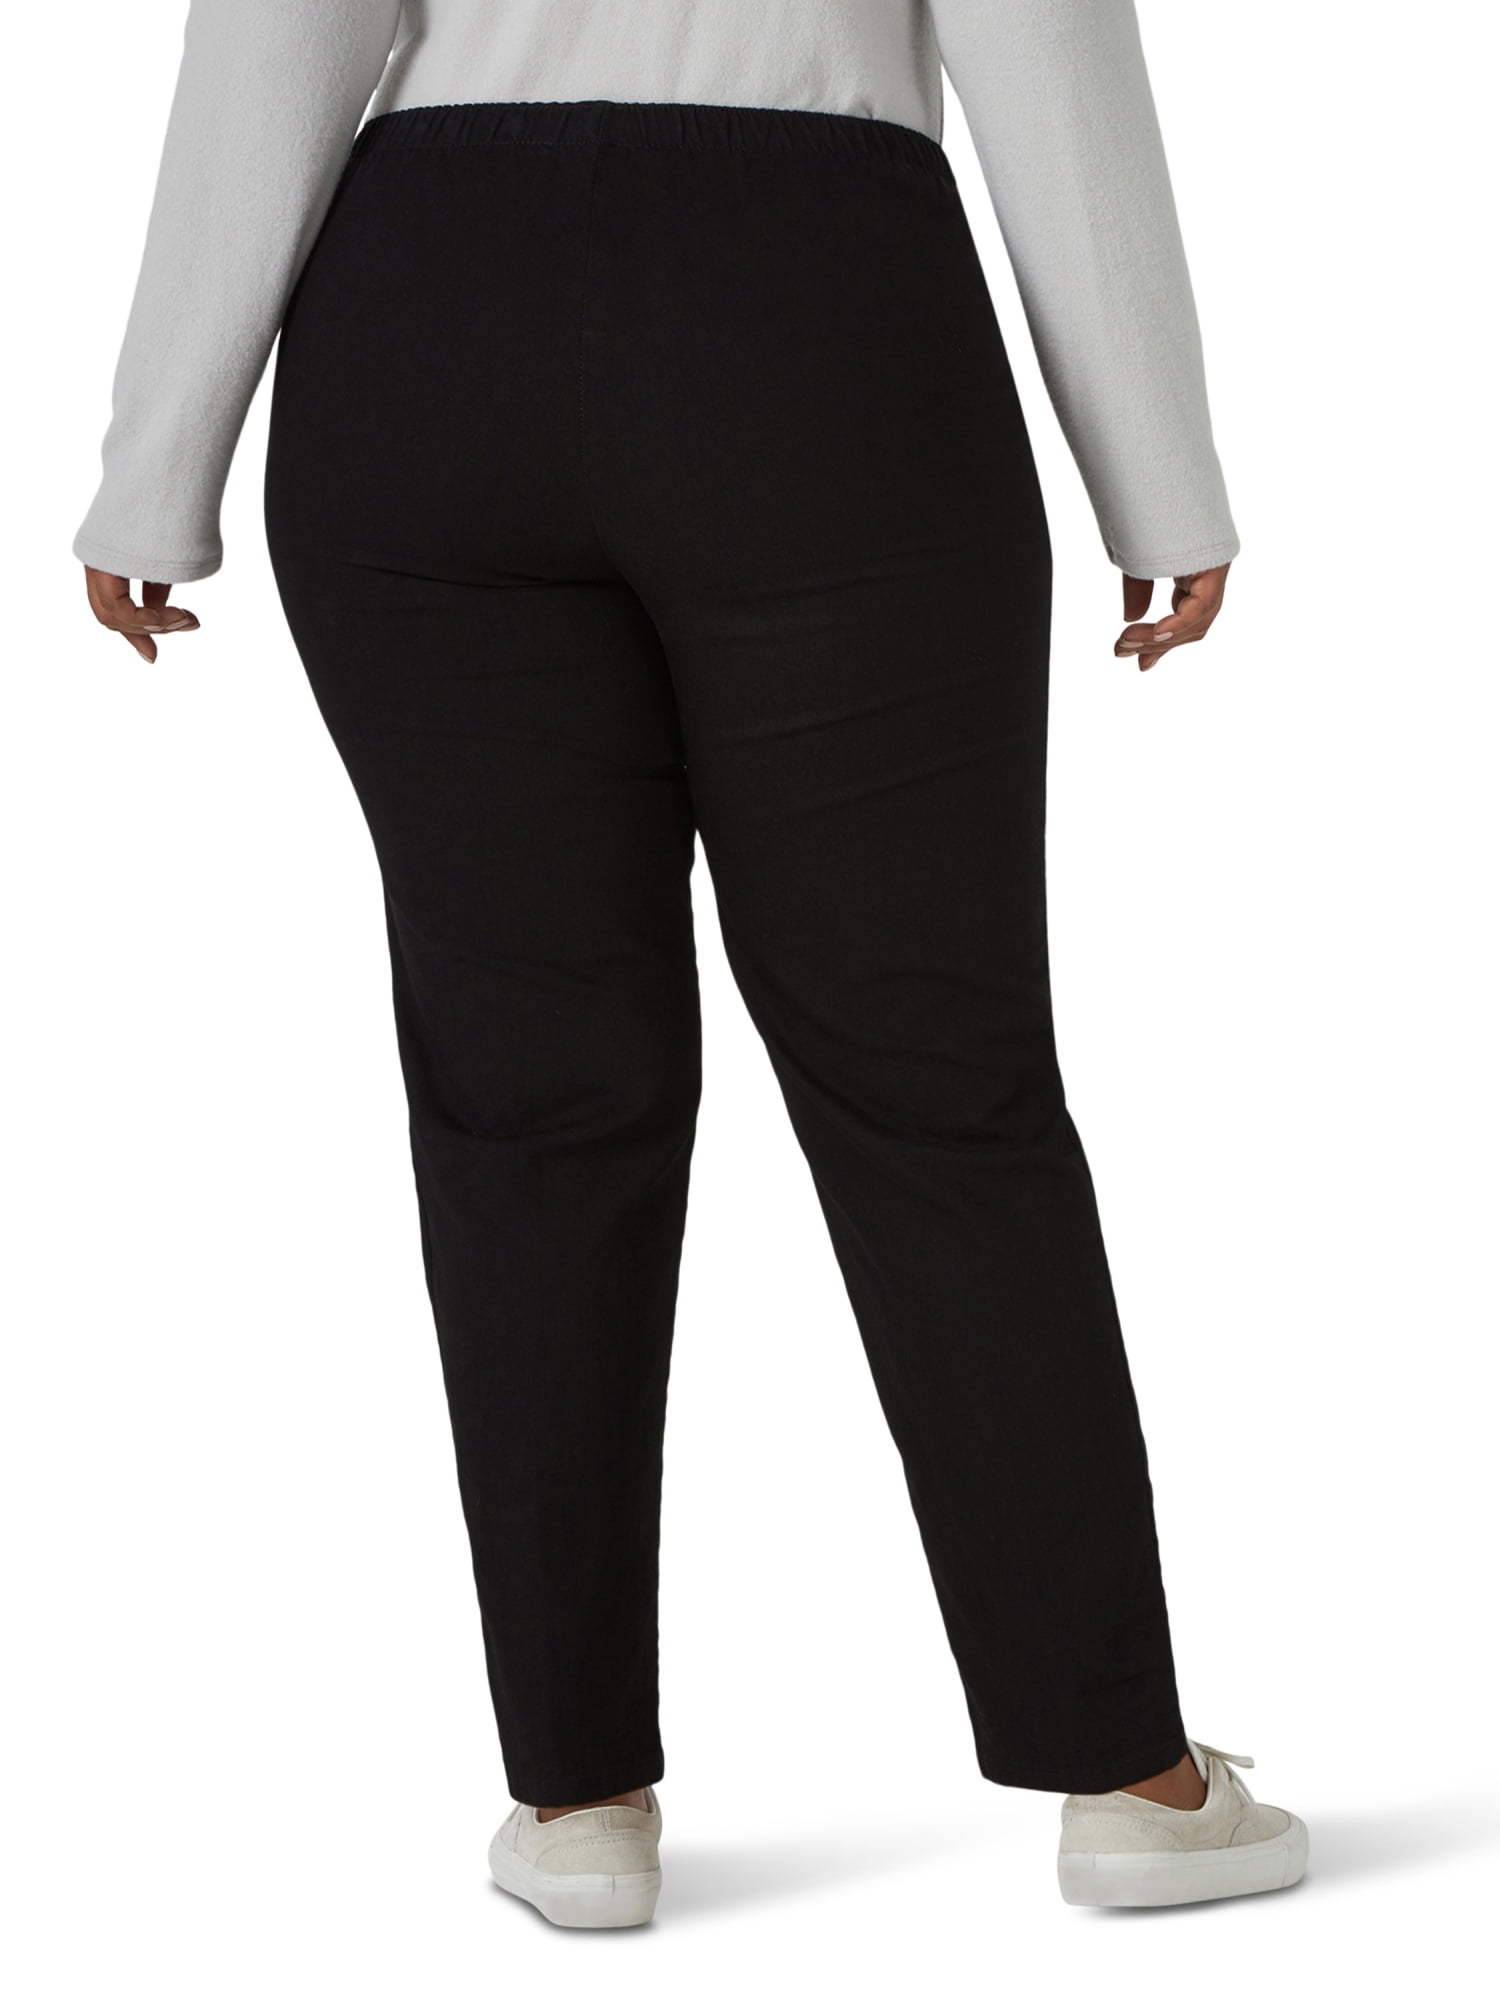 City Chic Black Stretch Pants Plus Size 18 / XXXL